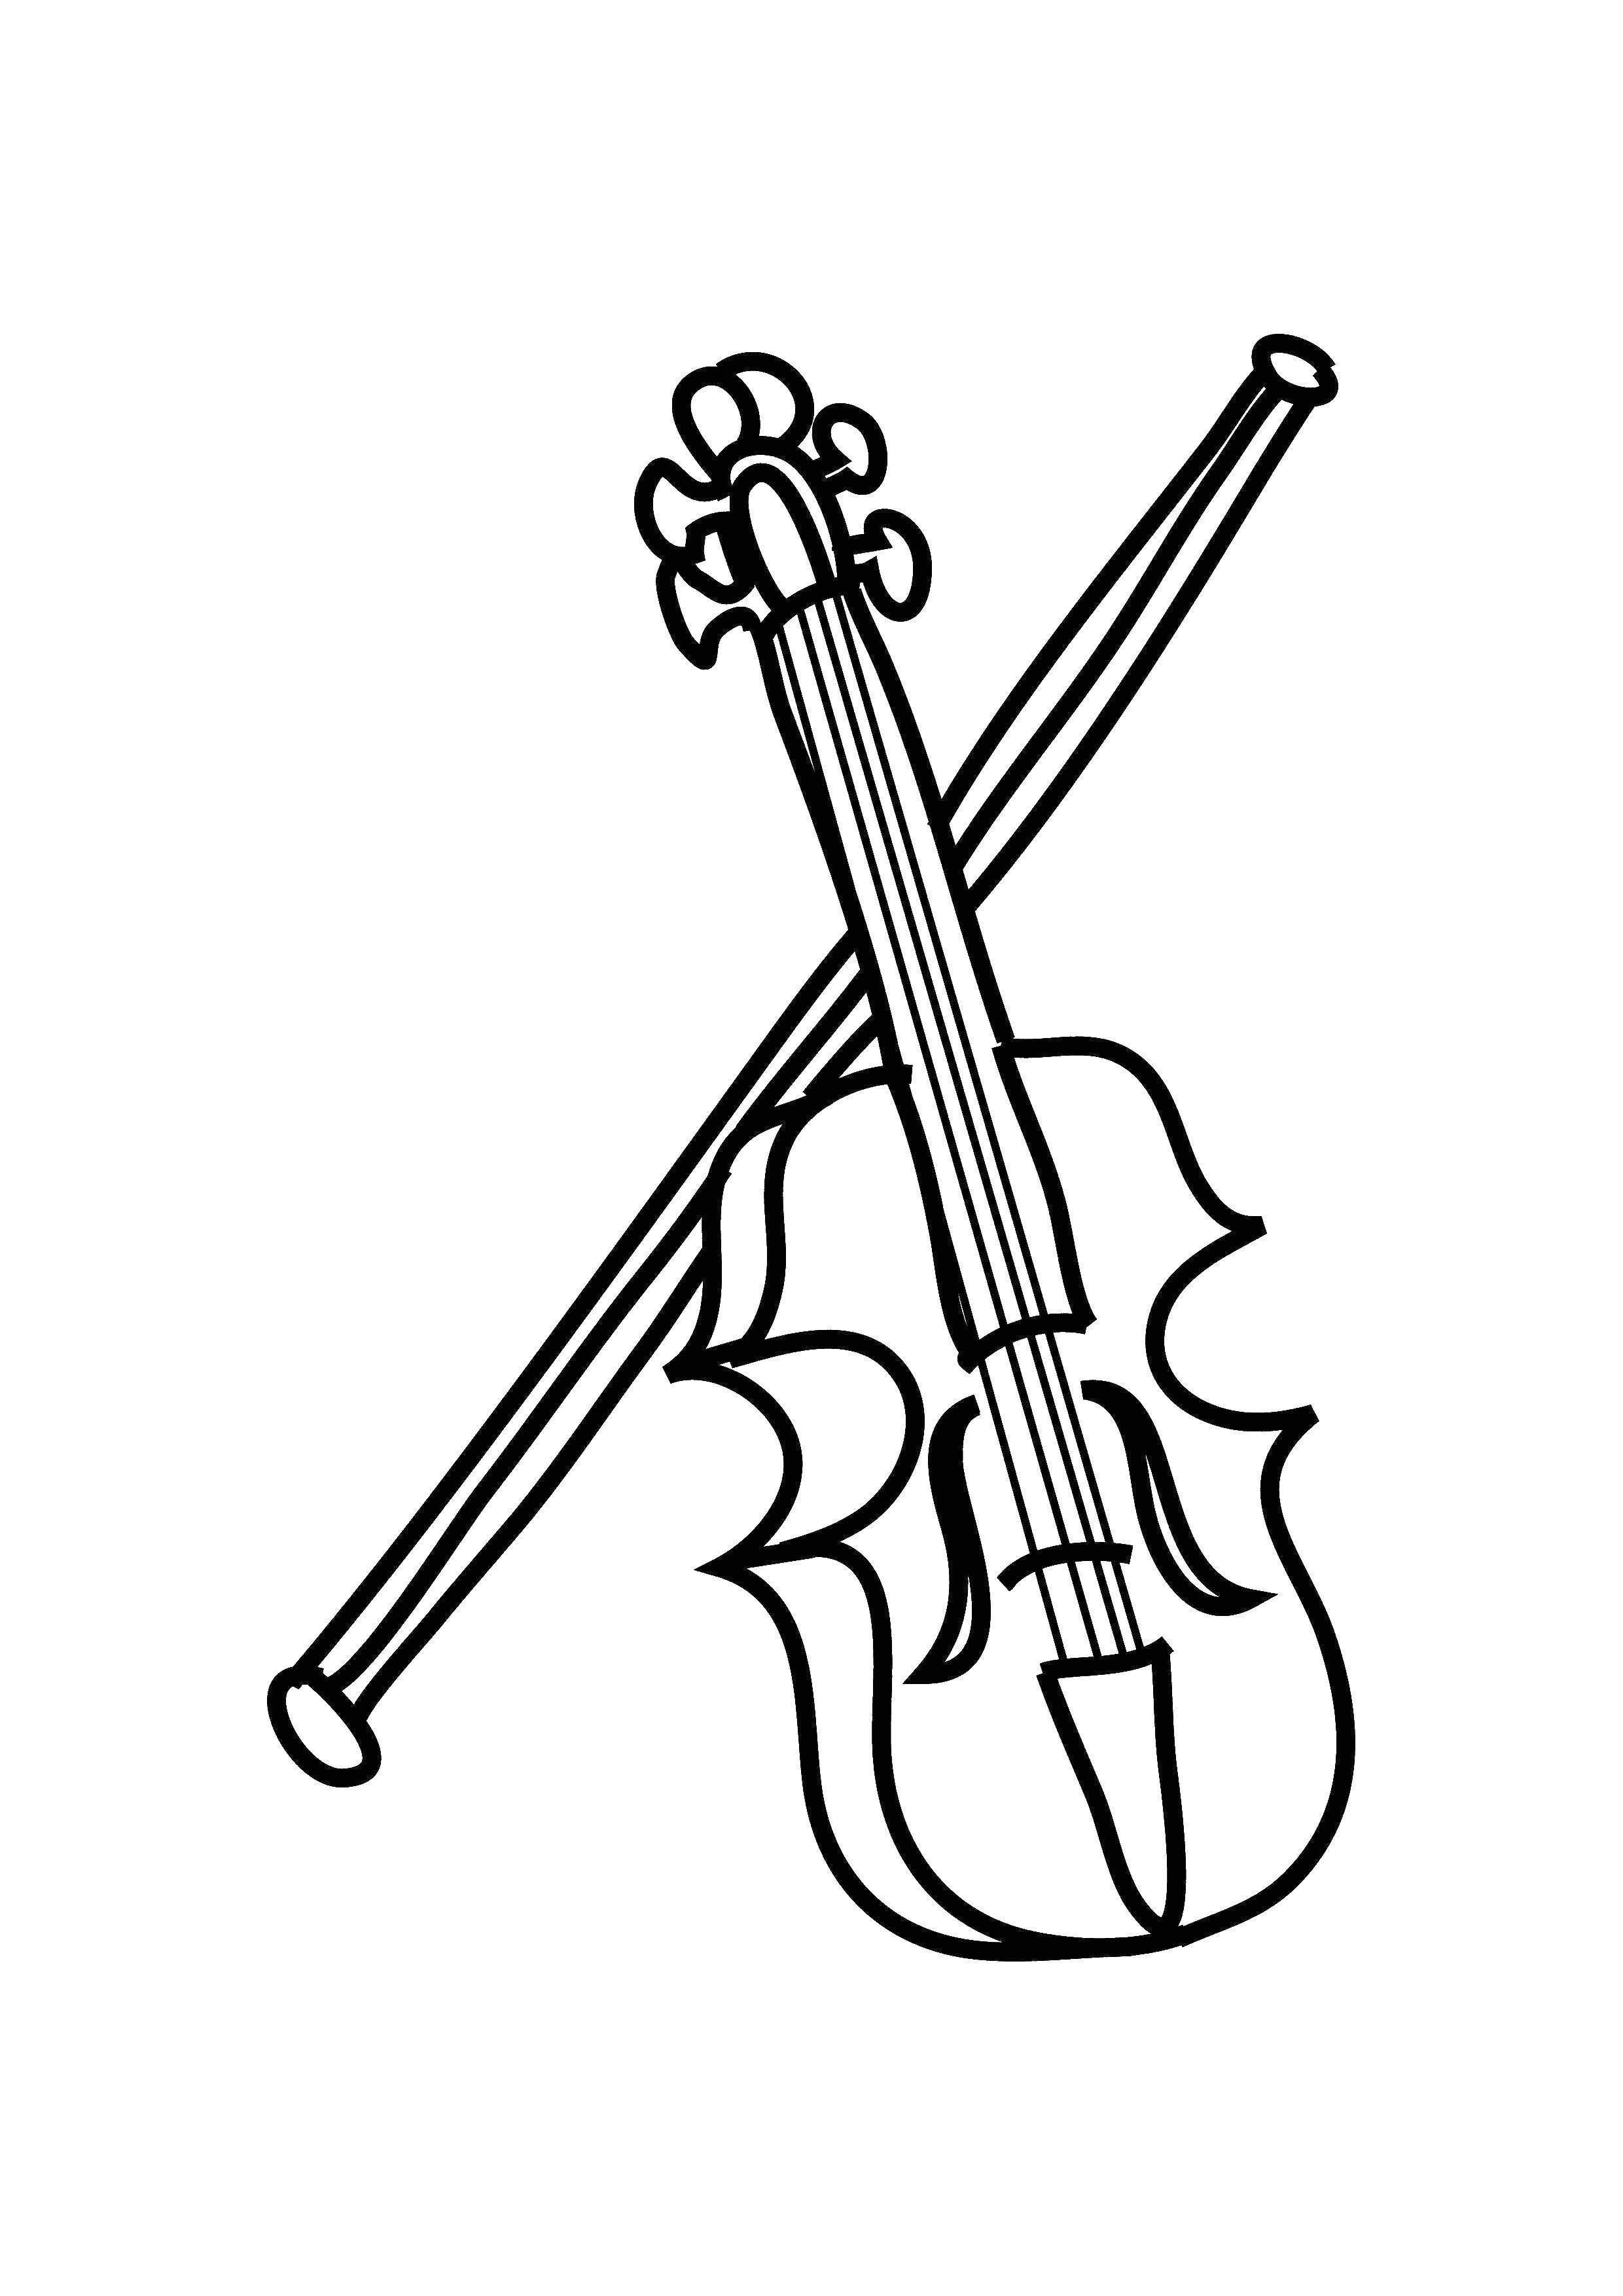 Coloring Violin. Category musical instruments . Tags:  violin.